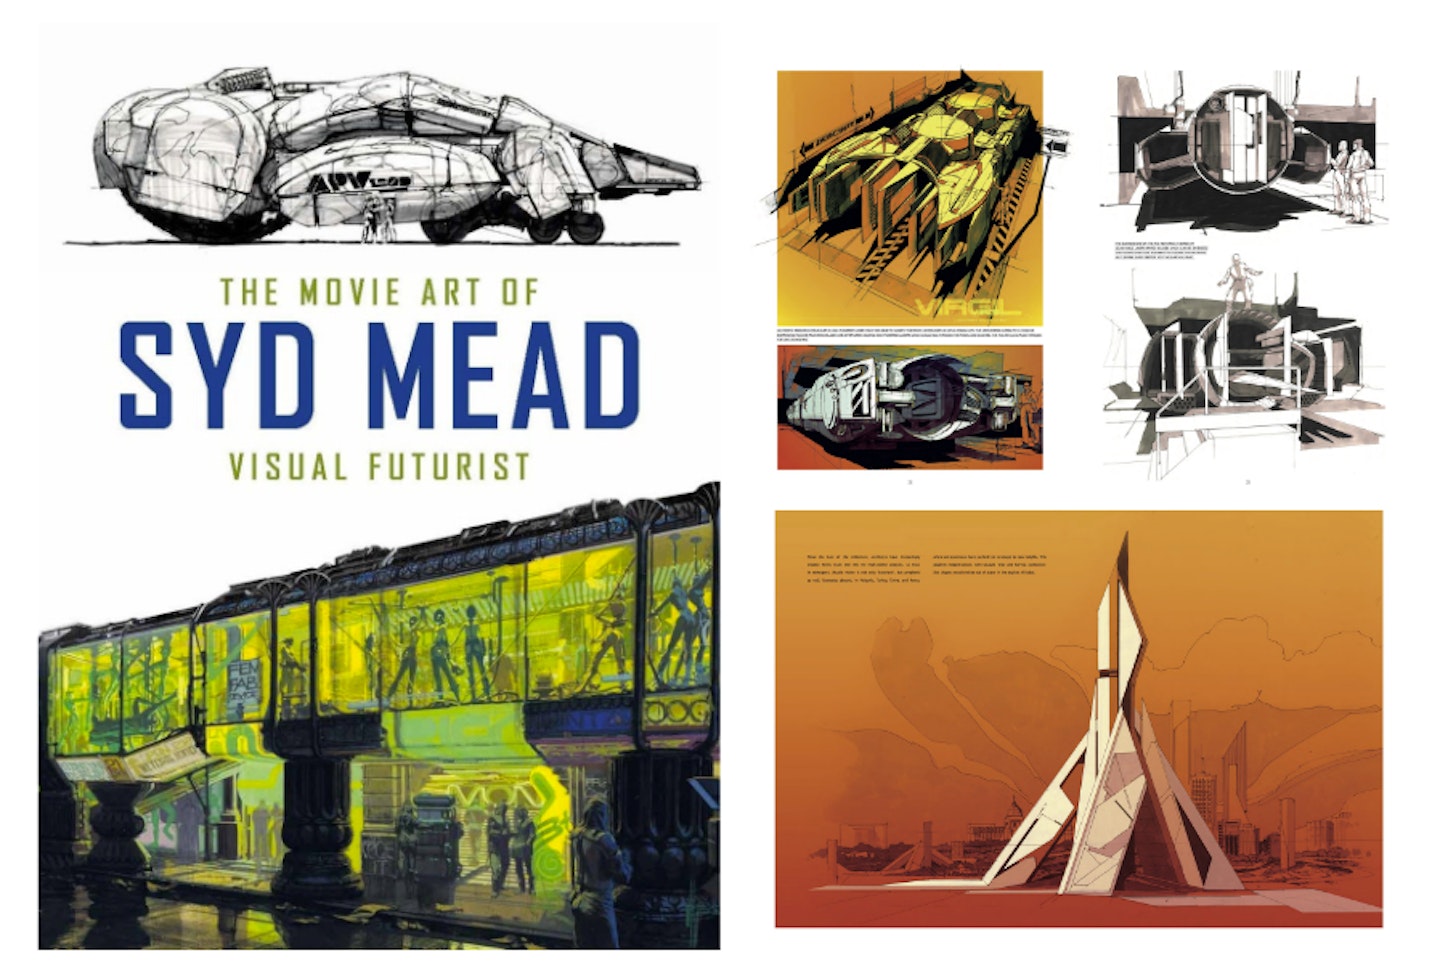 The Movie Art of Syd Mead: Visual Futurist